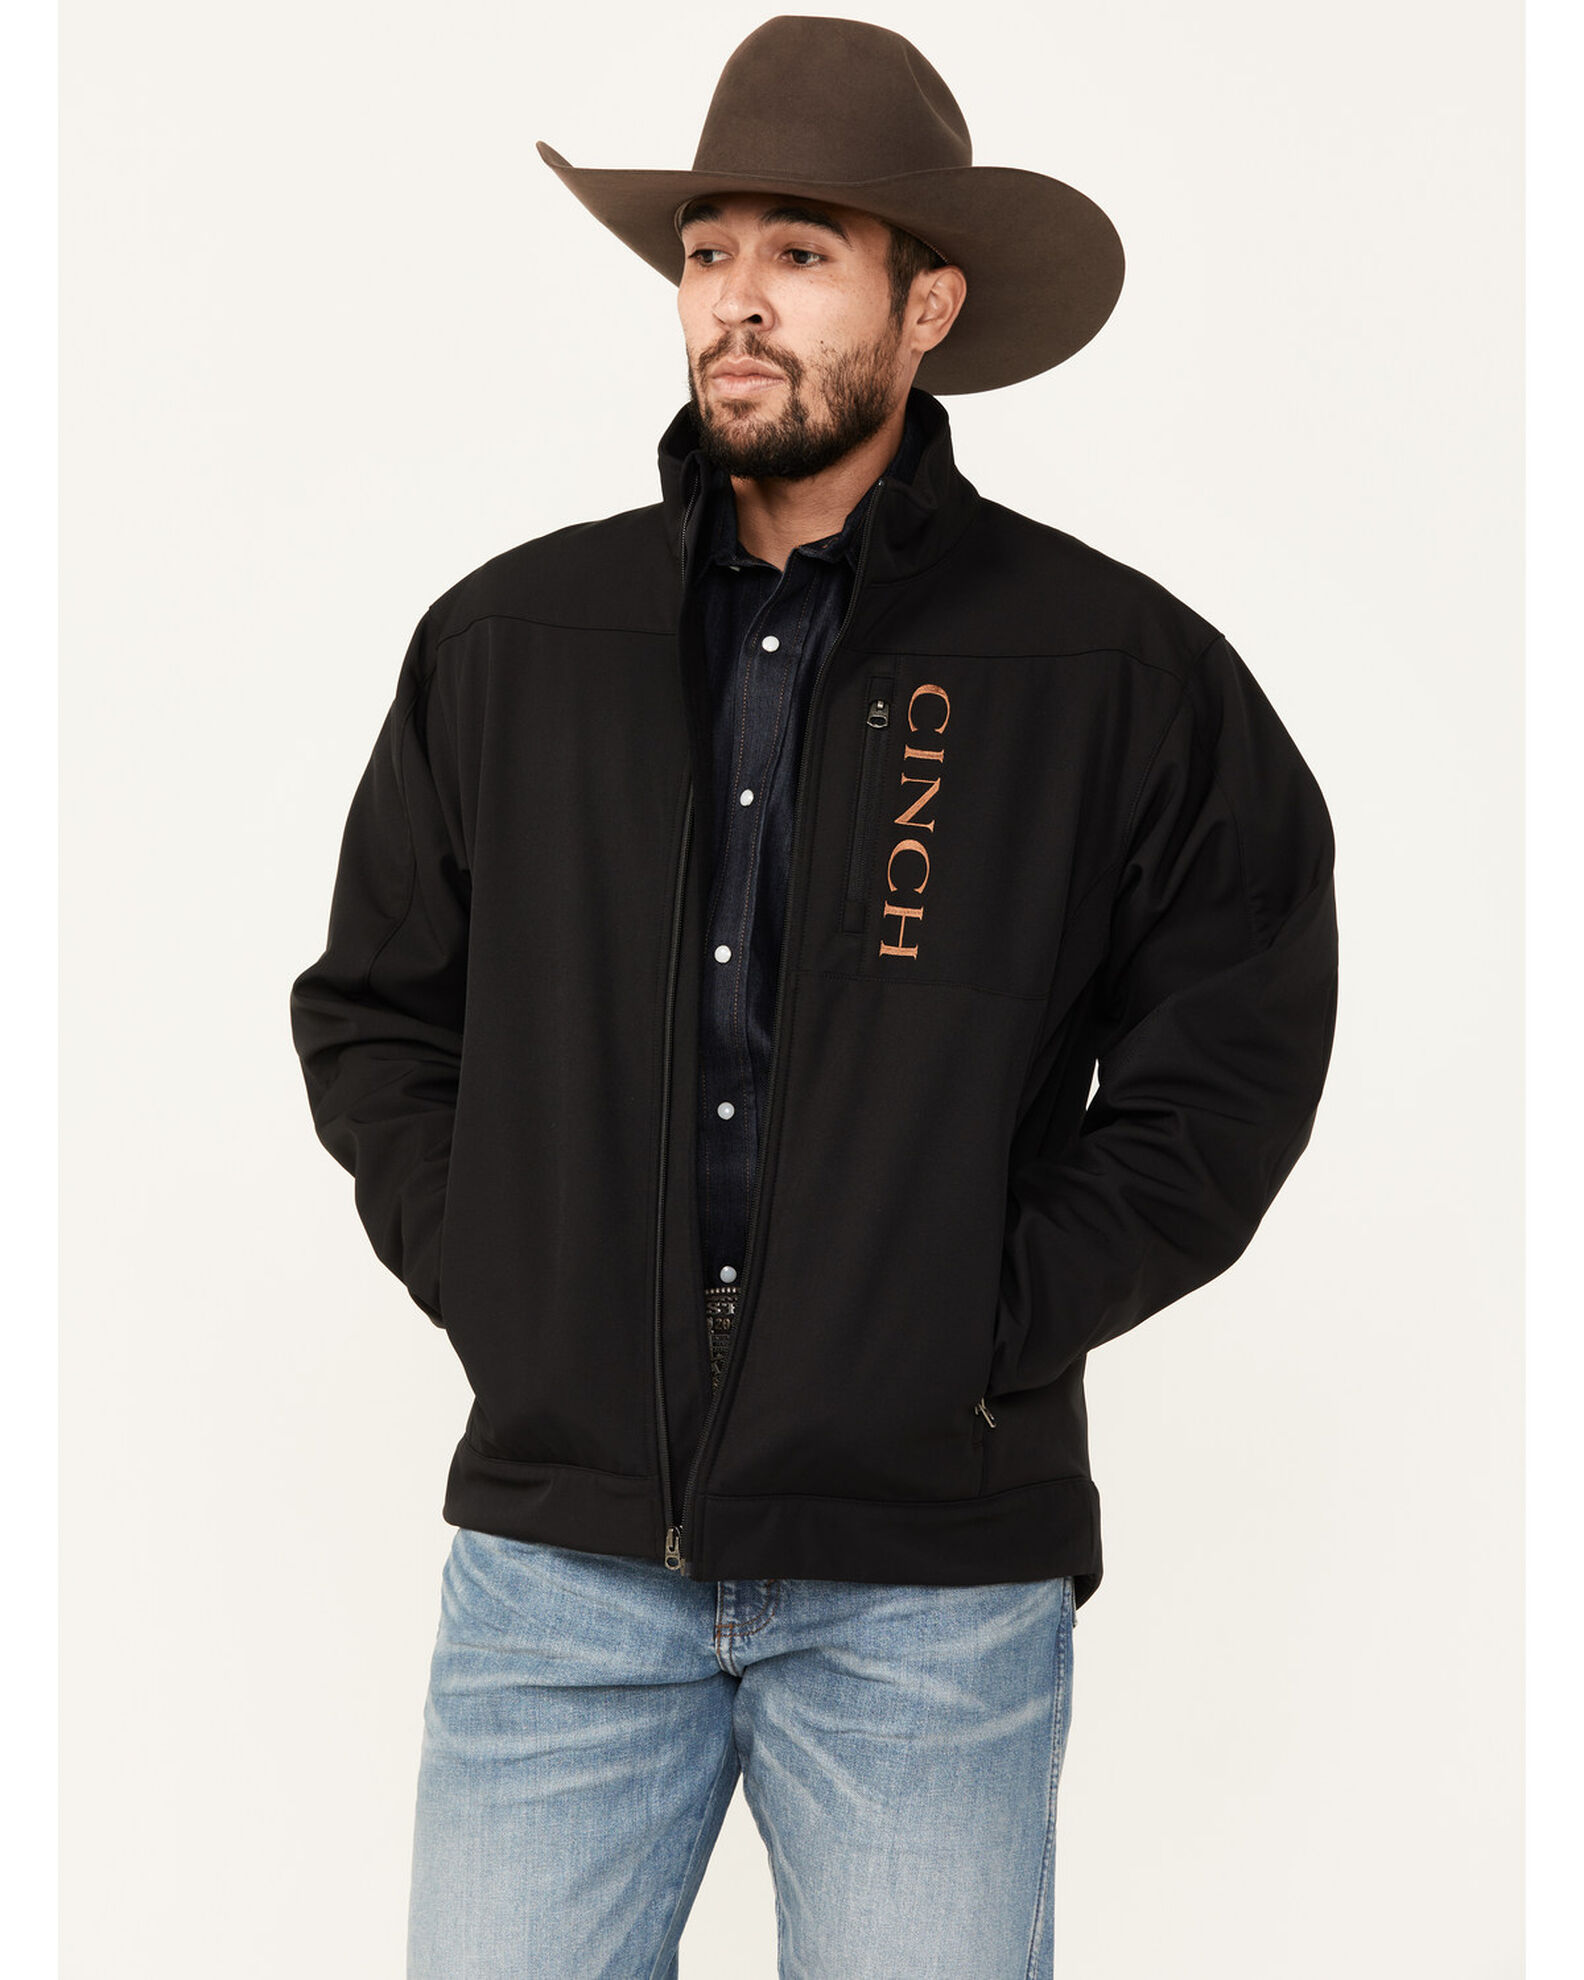 Product Name: Cinch Men's Bonded Softshell Jacket